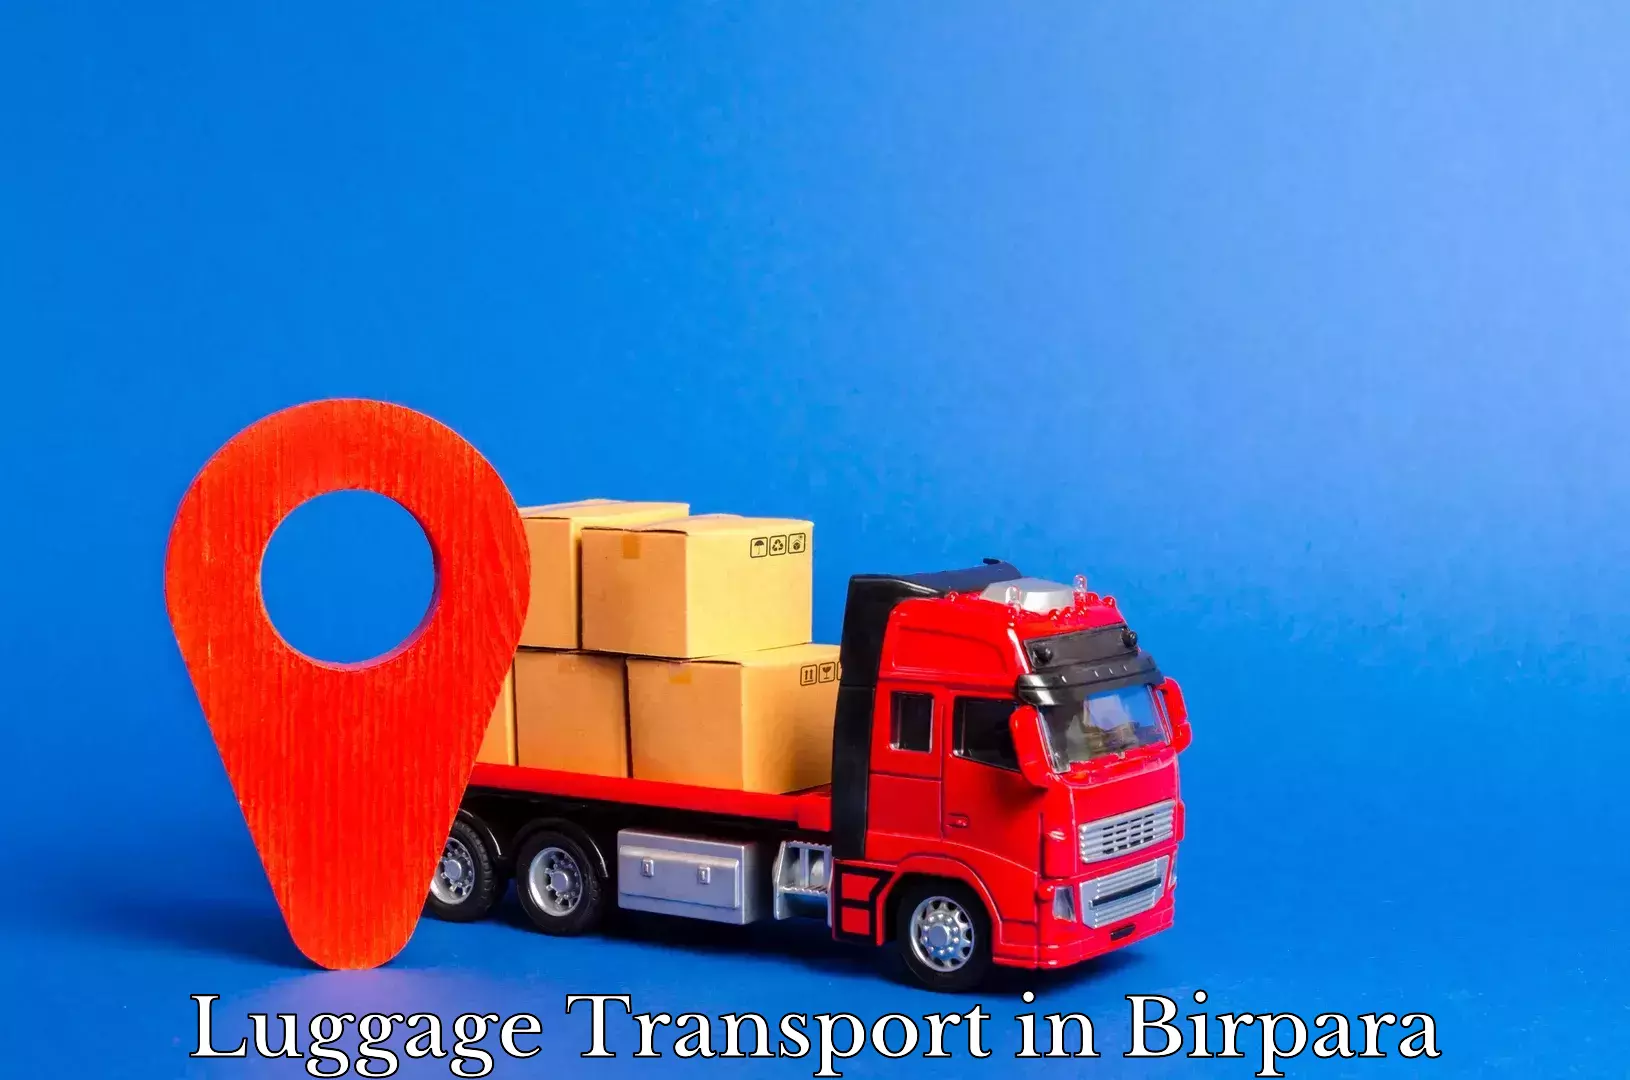 Nationwide luggage transport in Birpara